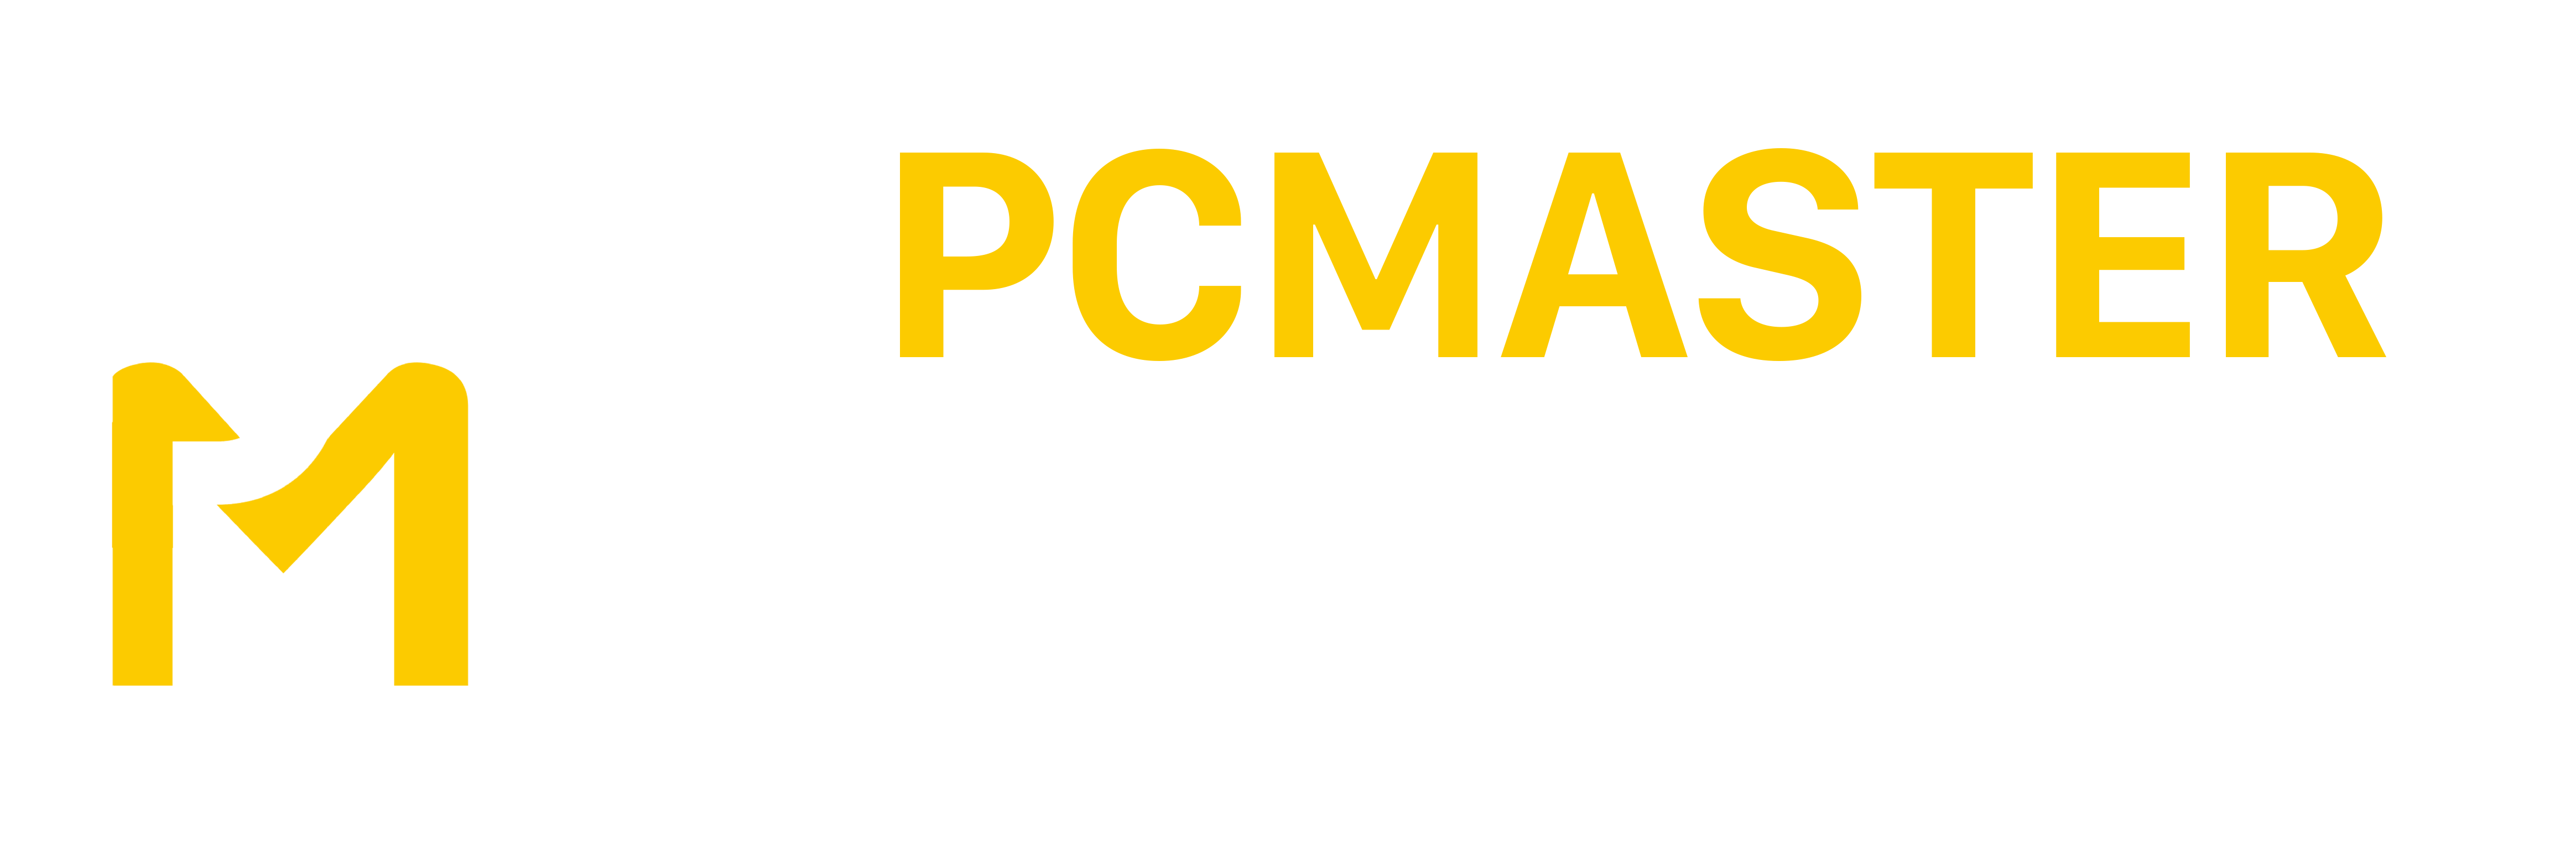 Pcmaster Setup